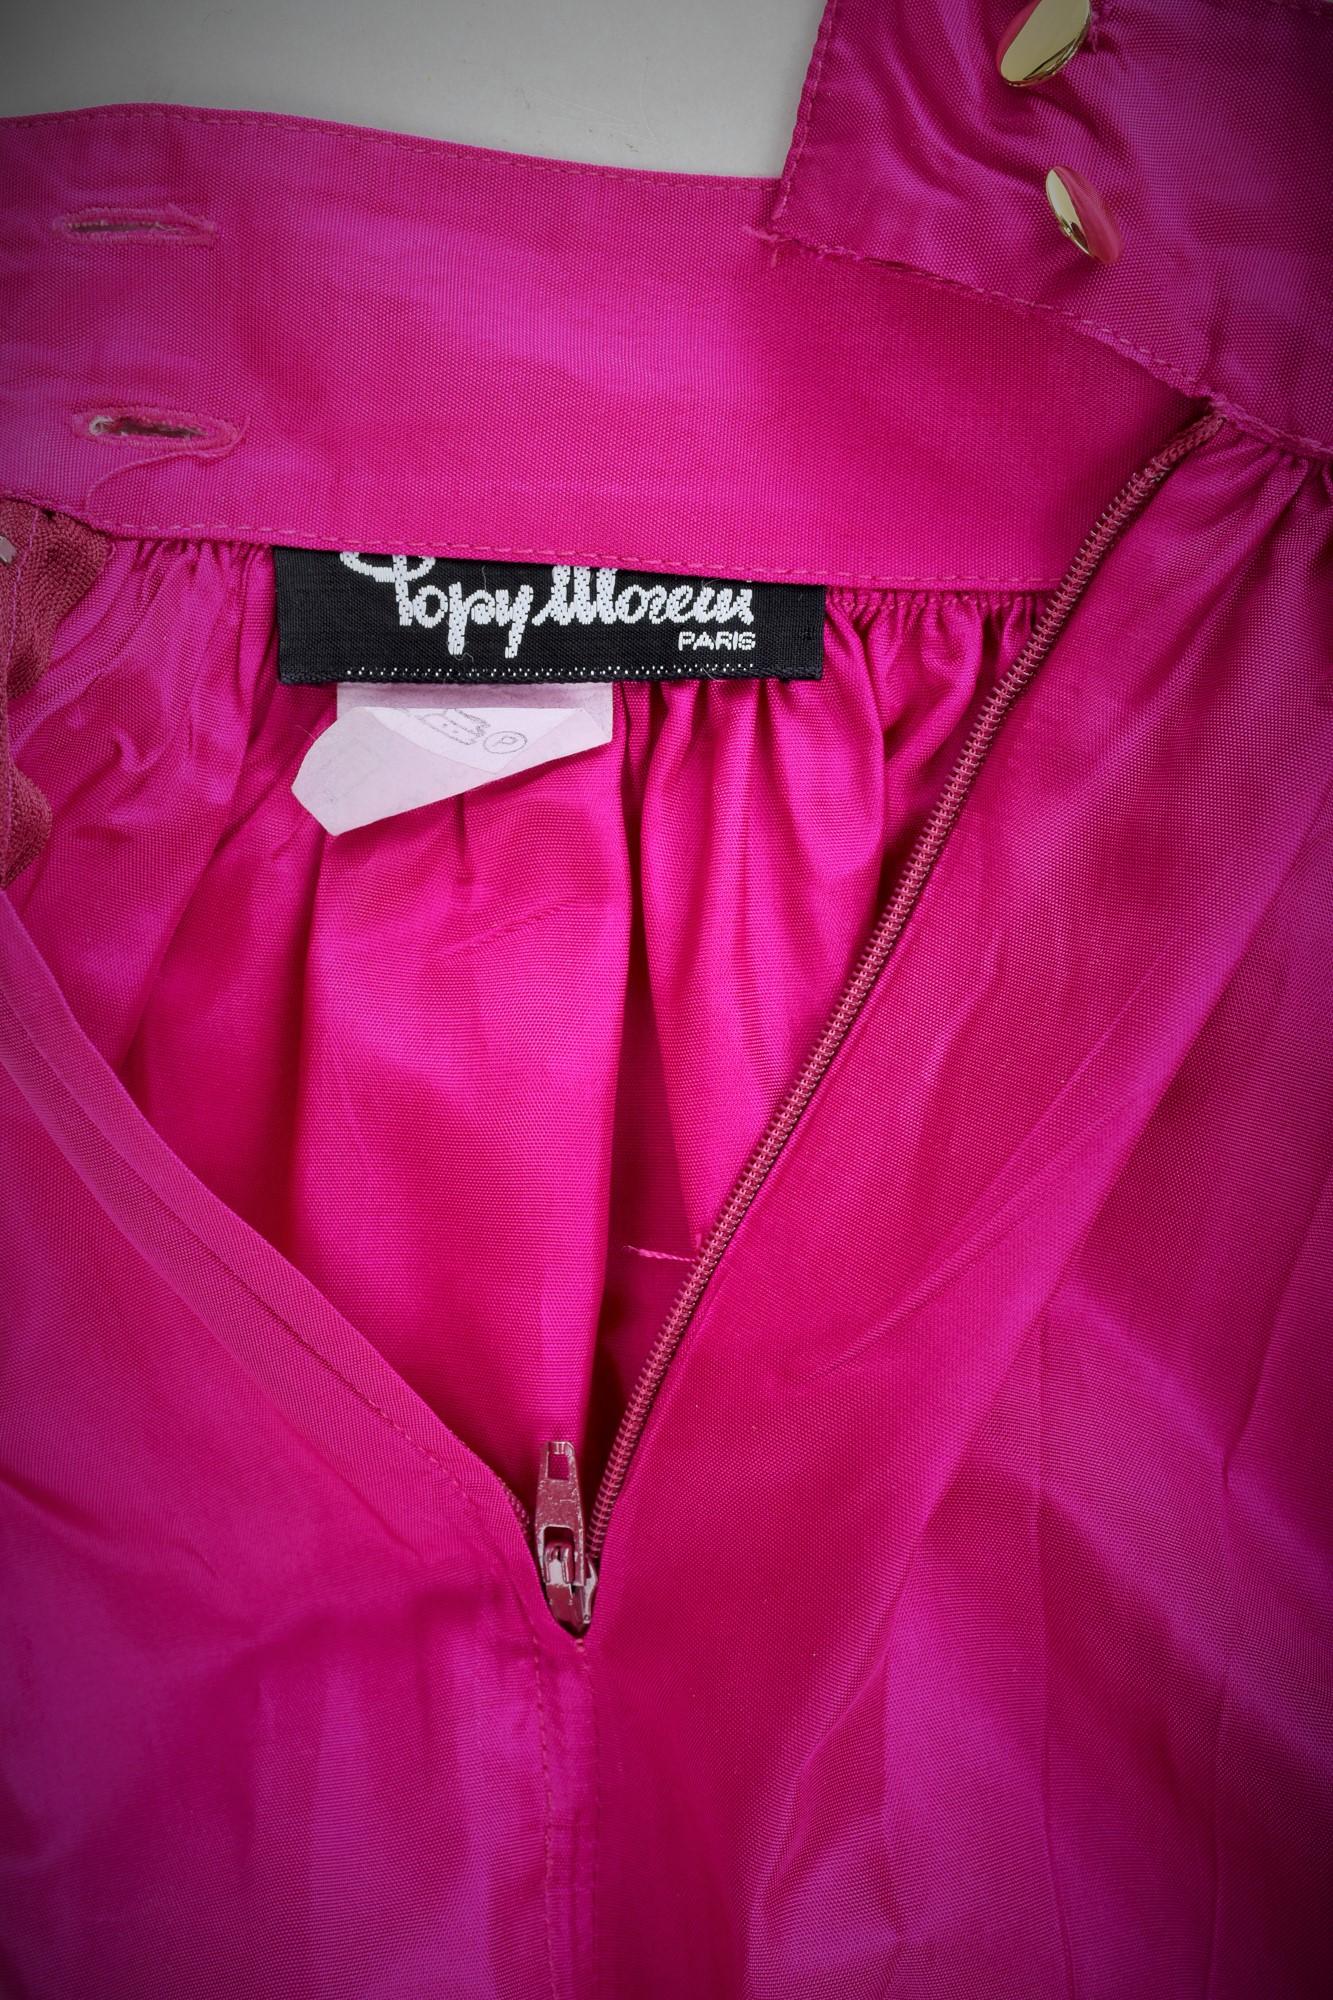 Pink A French Fuschia Taffeta Blouse and skirt By Popy Moreni Paris Circa 1990 For Sale